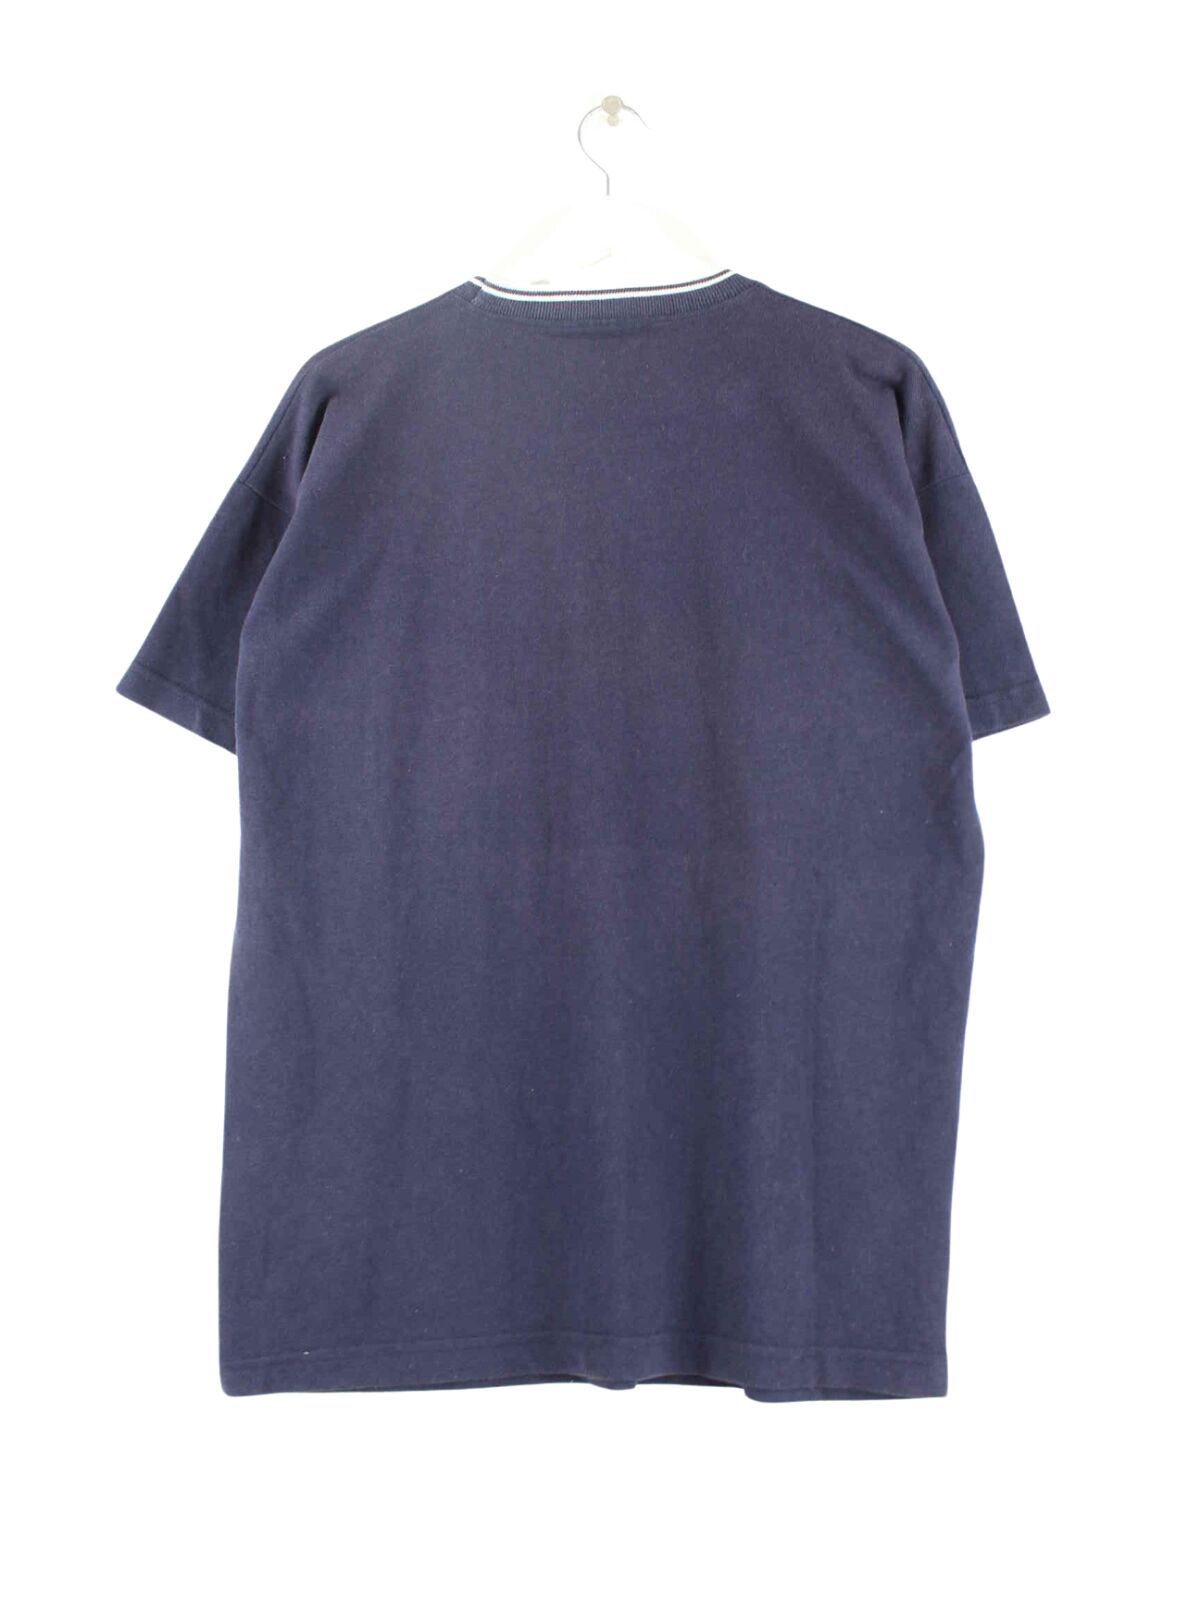 Lacoste 90s Vintage Basic T-Shirt Blau L (back image)